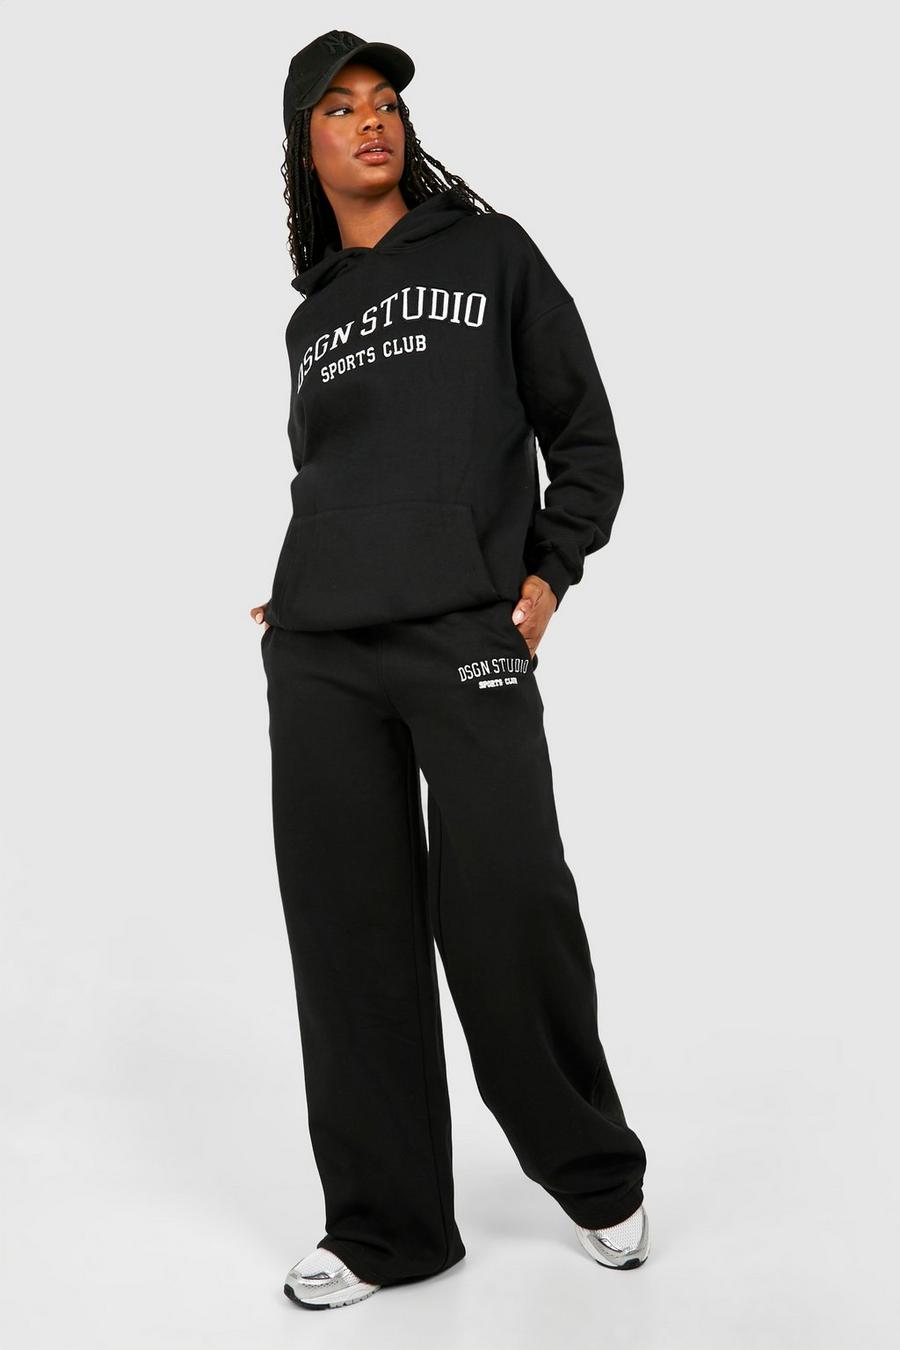 Pantalón deportivo Tall de pernera recta con aplique Dsgn Studio, Black image number 1